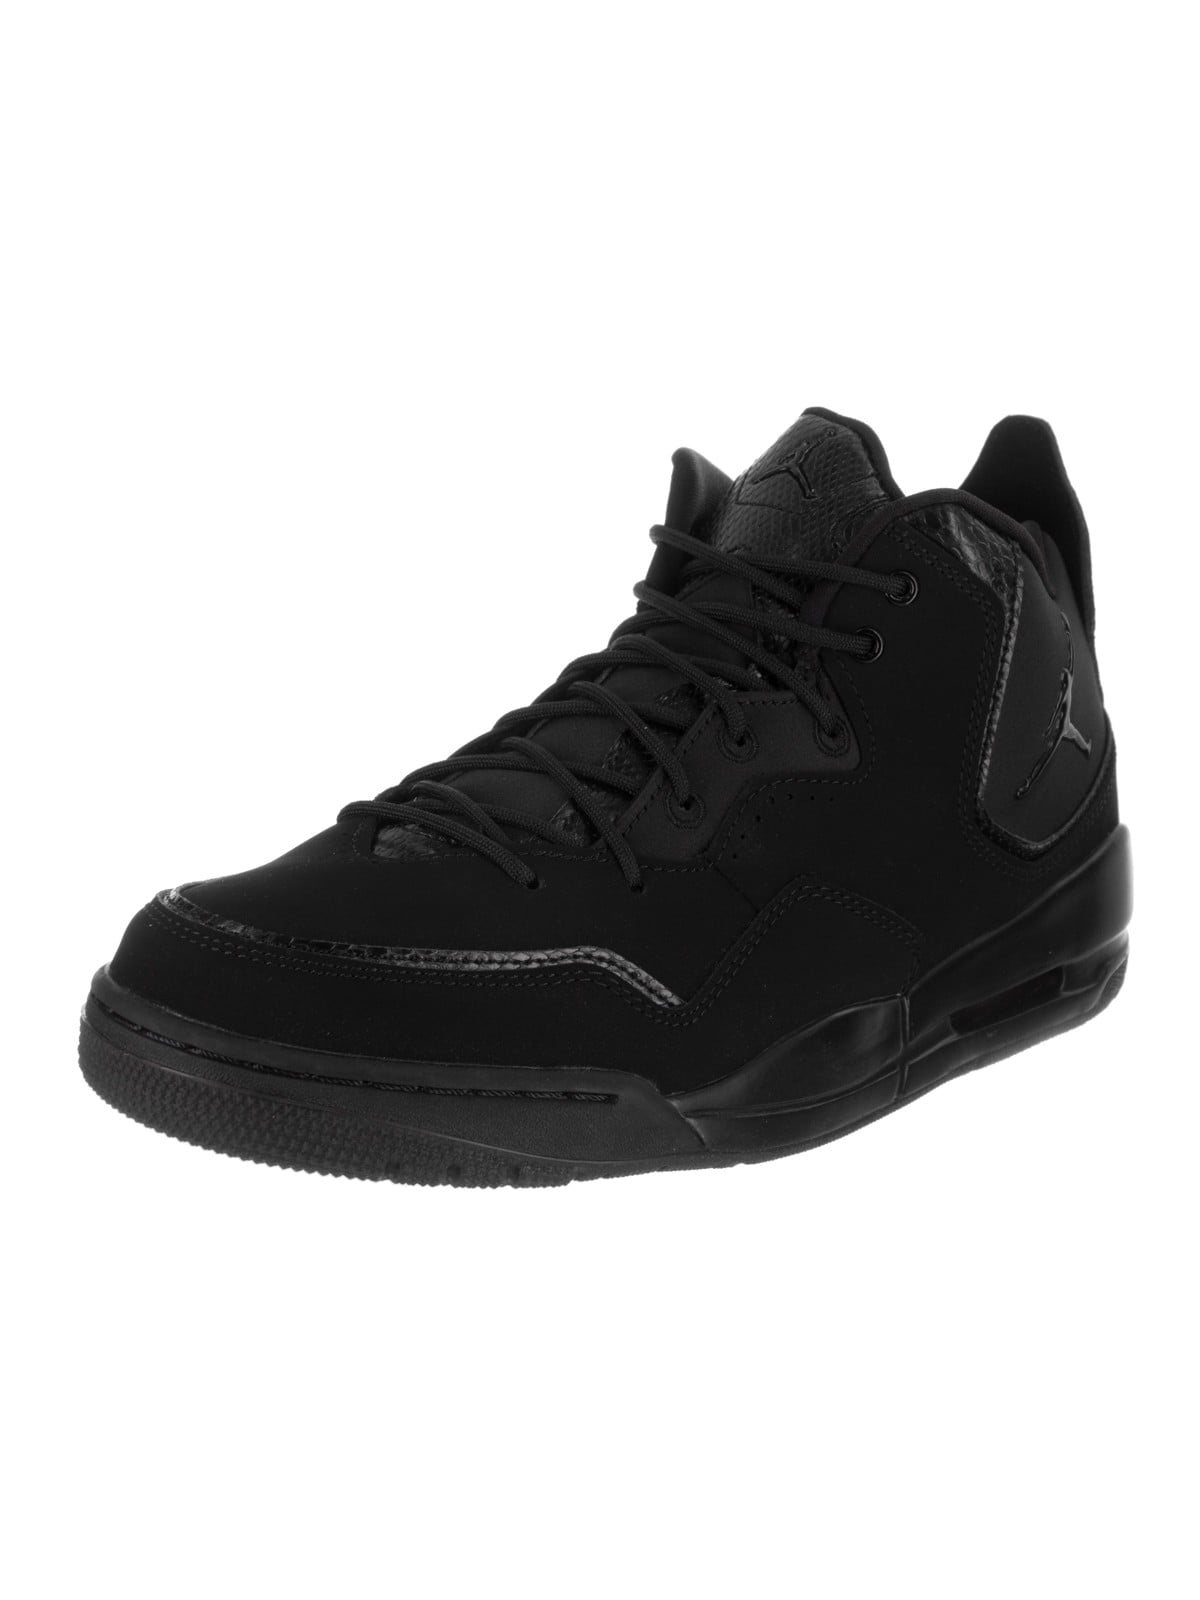 Nike Jordan Jordan Courtside 23 Basketball Shoe Walmart.com